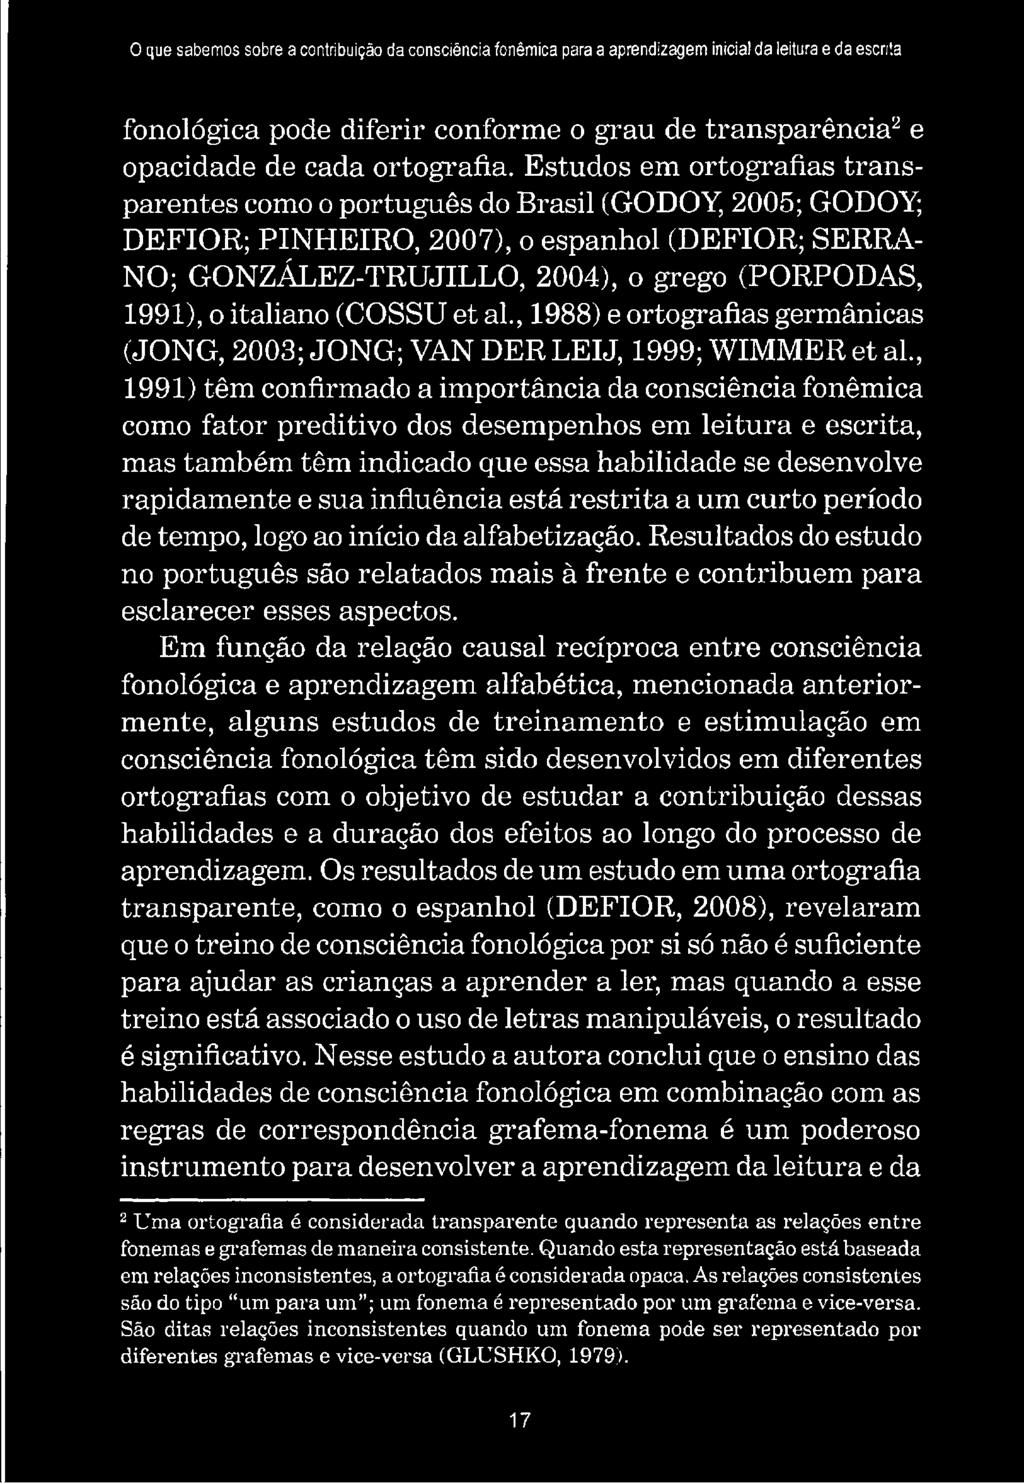 italiano (COSSU et al., 1988) e ortografias germânicas (JONG, 2003; JONG; VAN DERLEIJ, 1999; WIMMERetal.